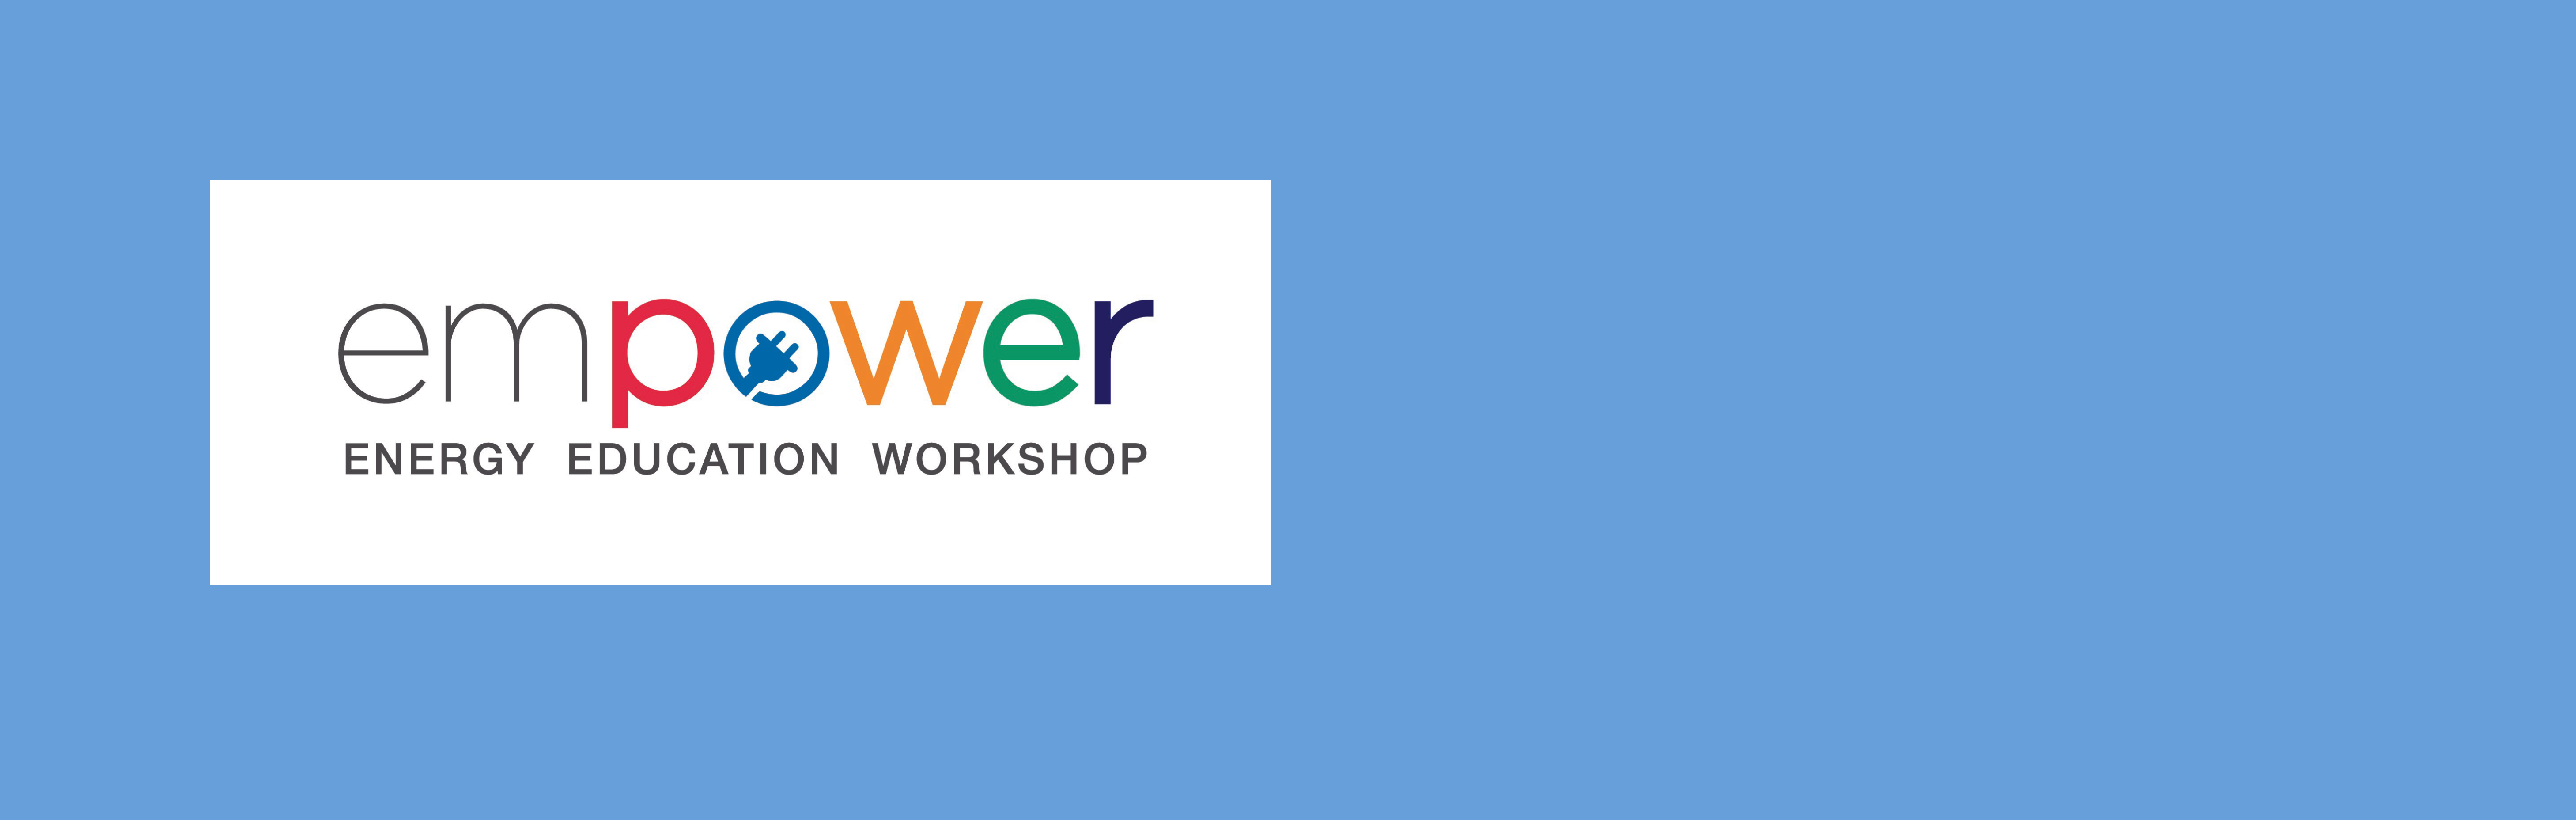 Empower Energy Education Workshop